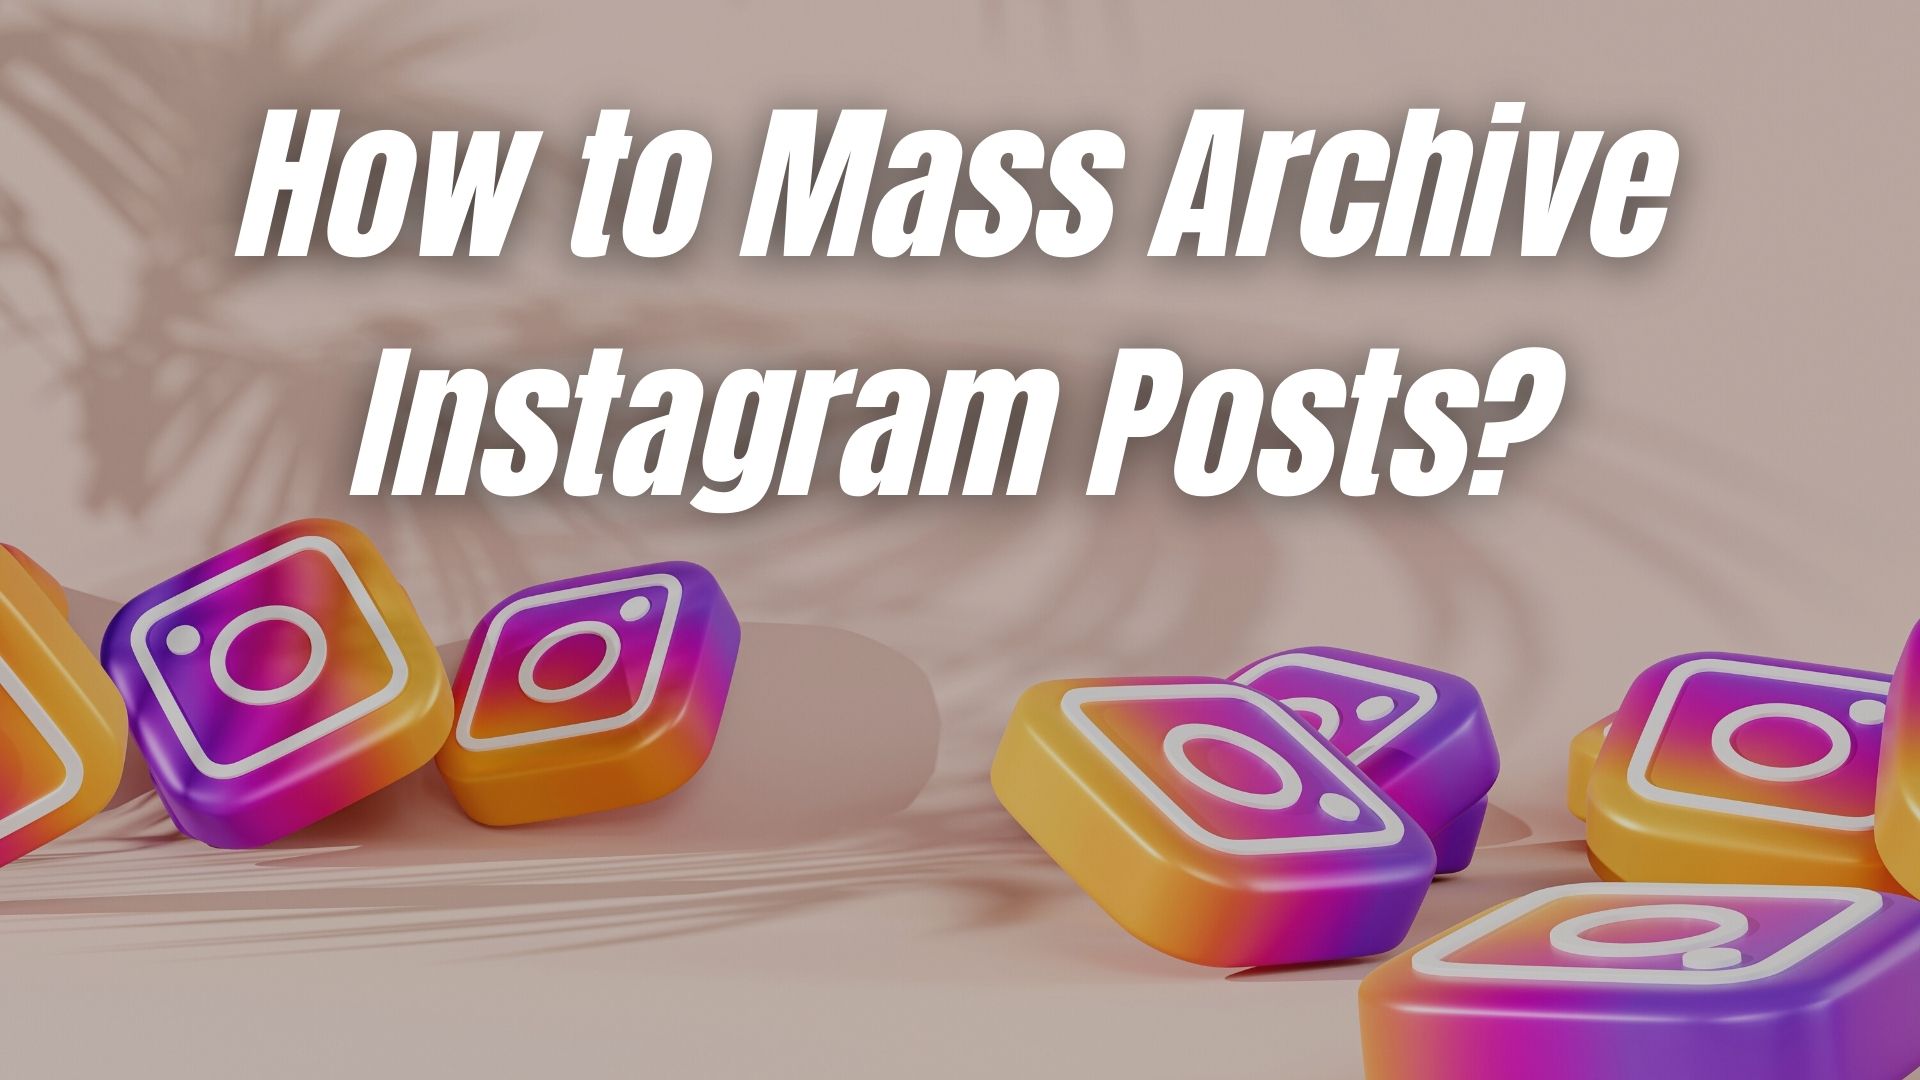 Mass Archive Instagram Posts